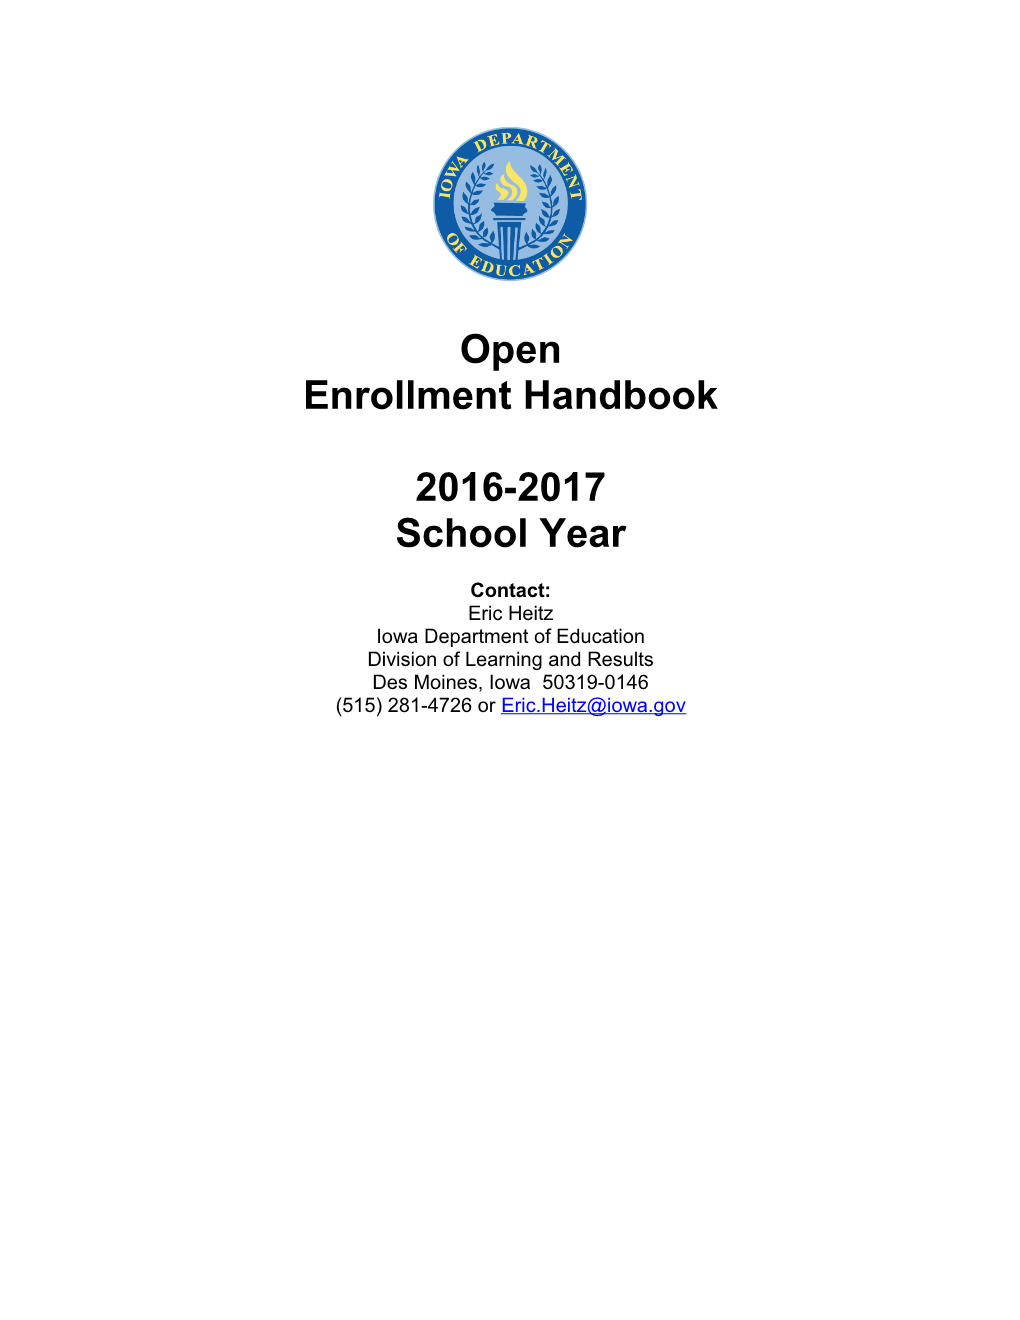 Enrollment Handbook